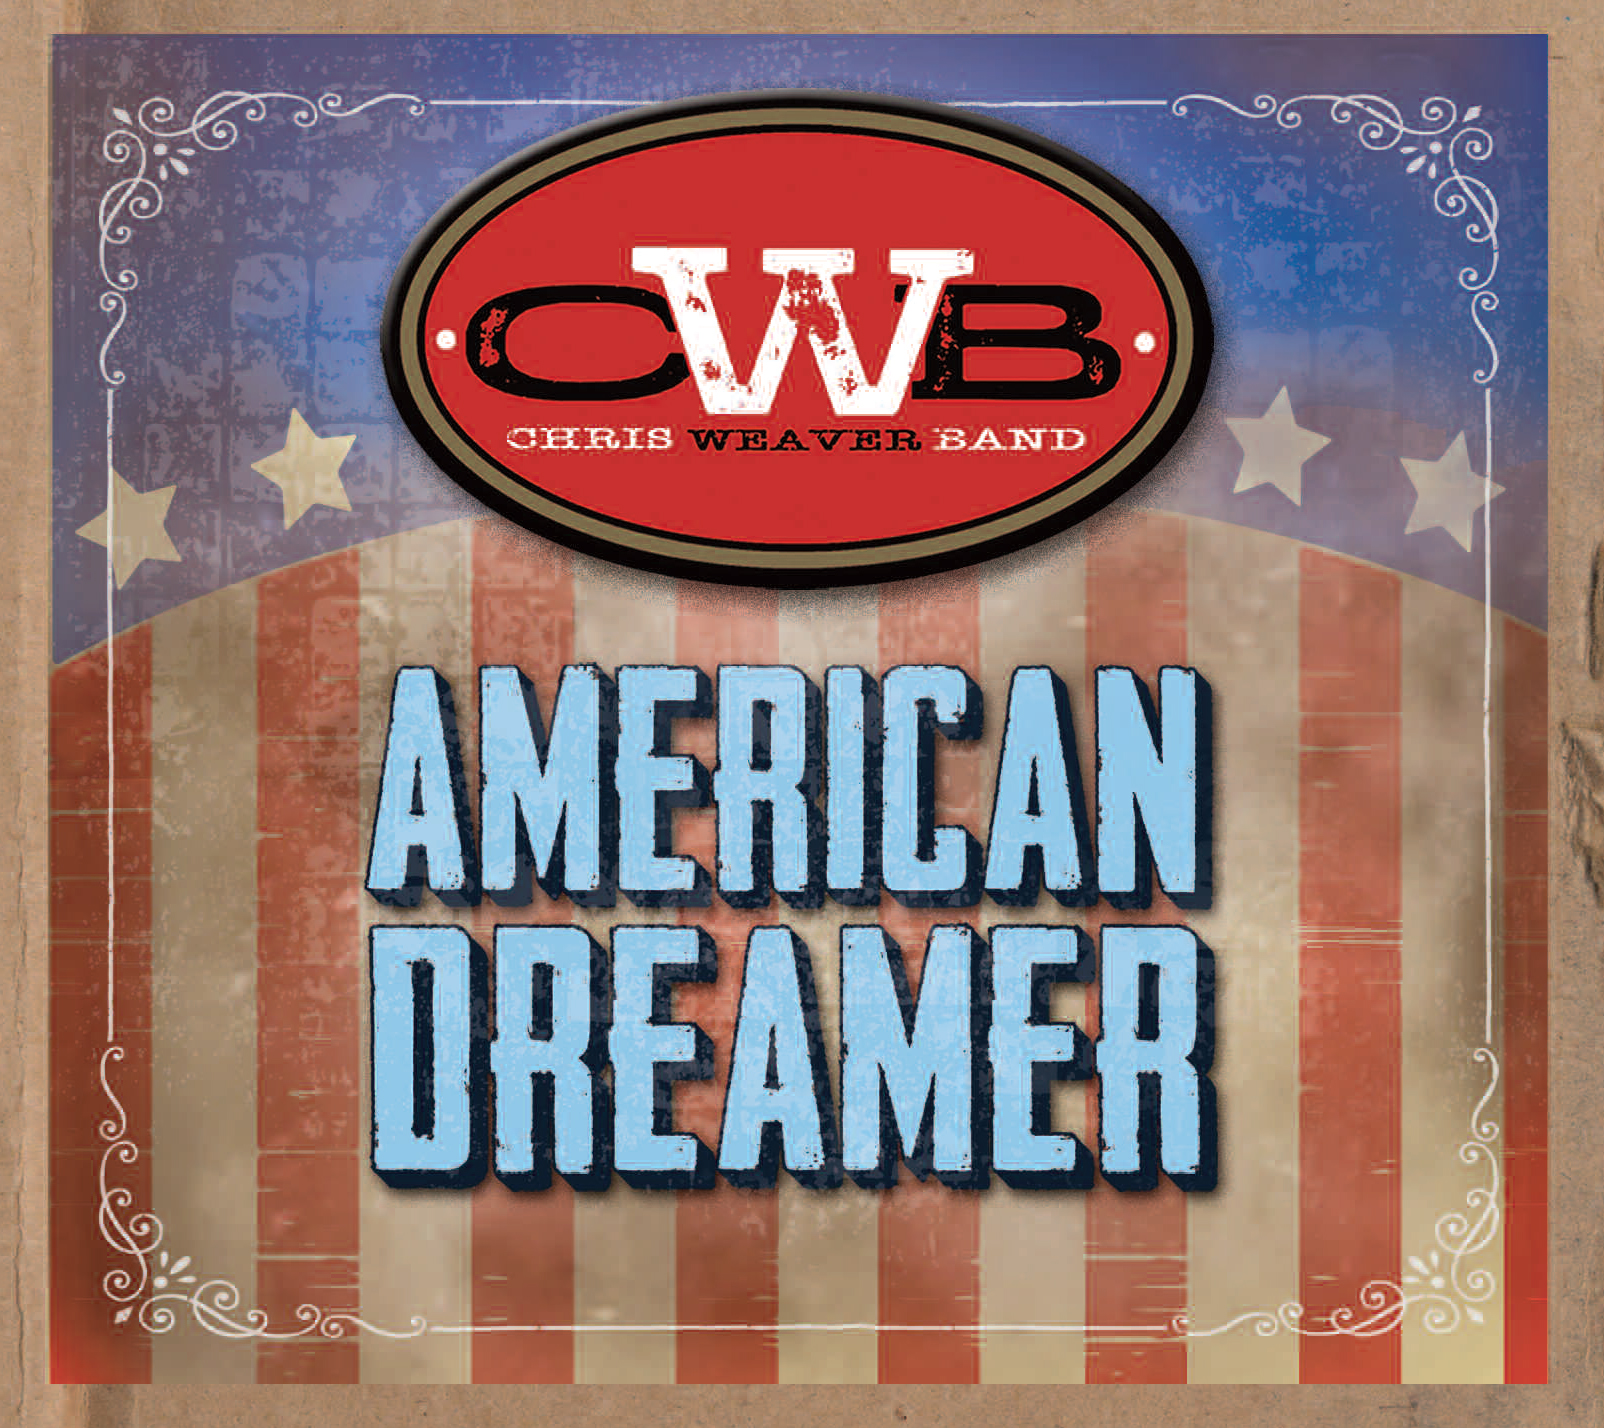  Chris Weaver Band – American Dreamer